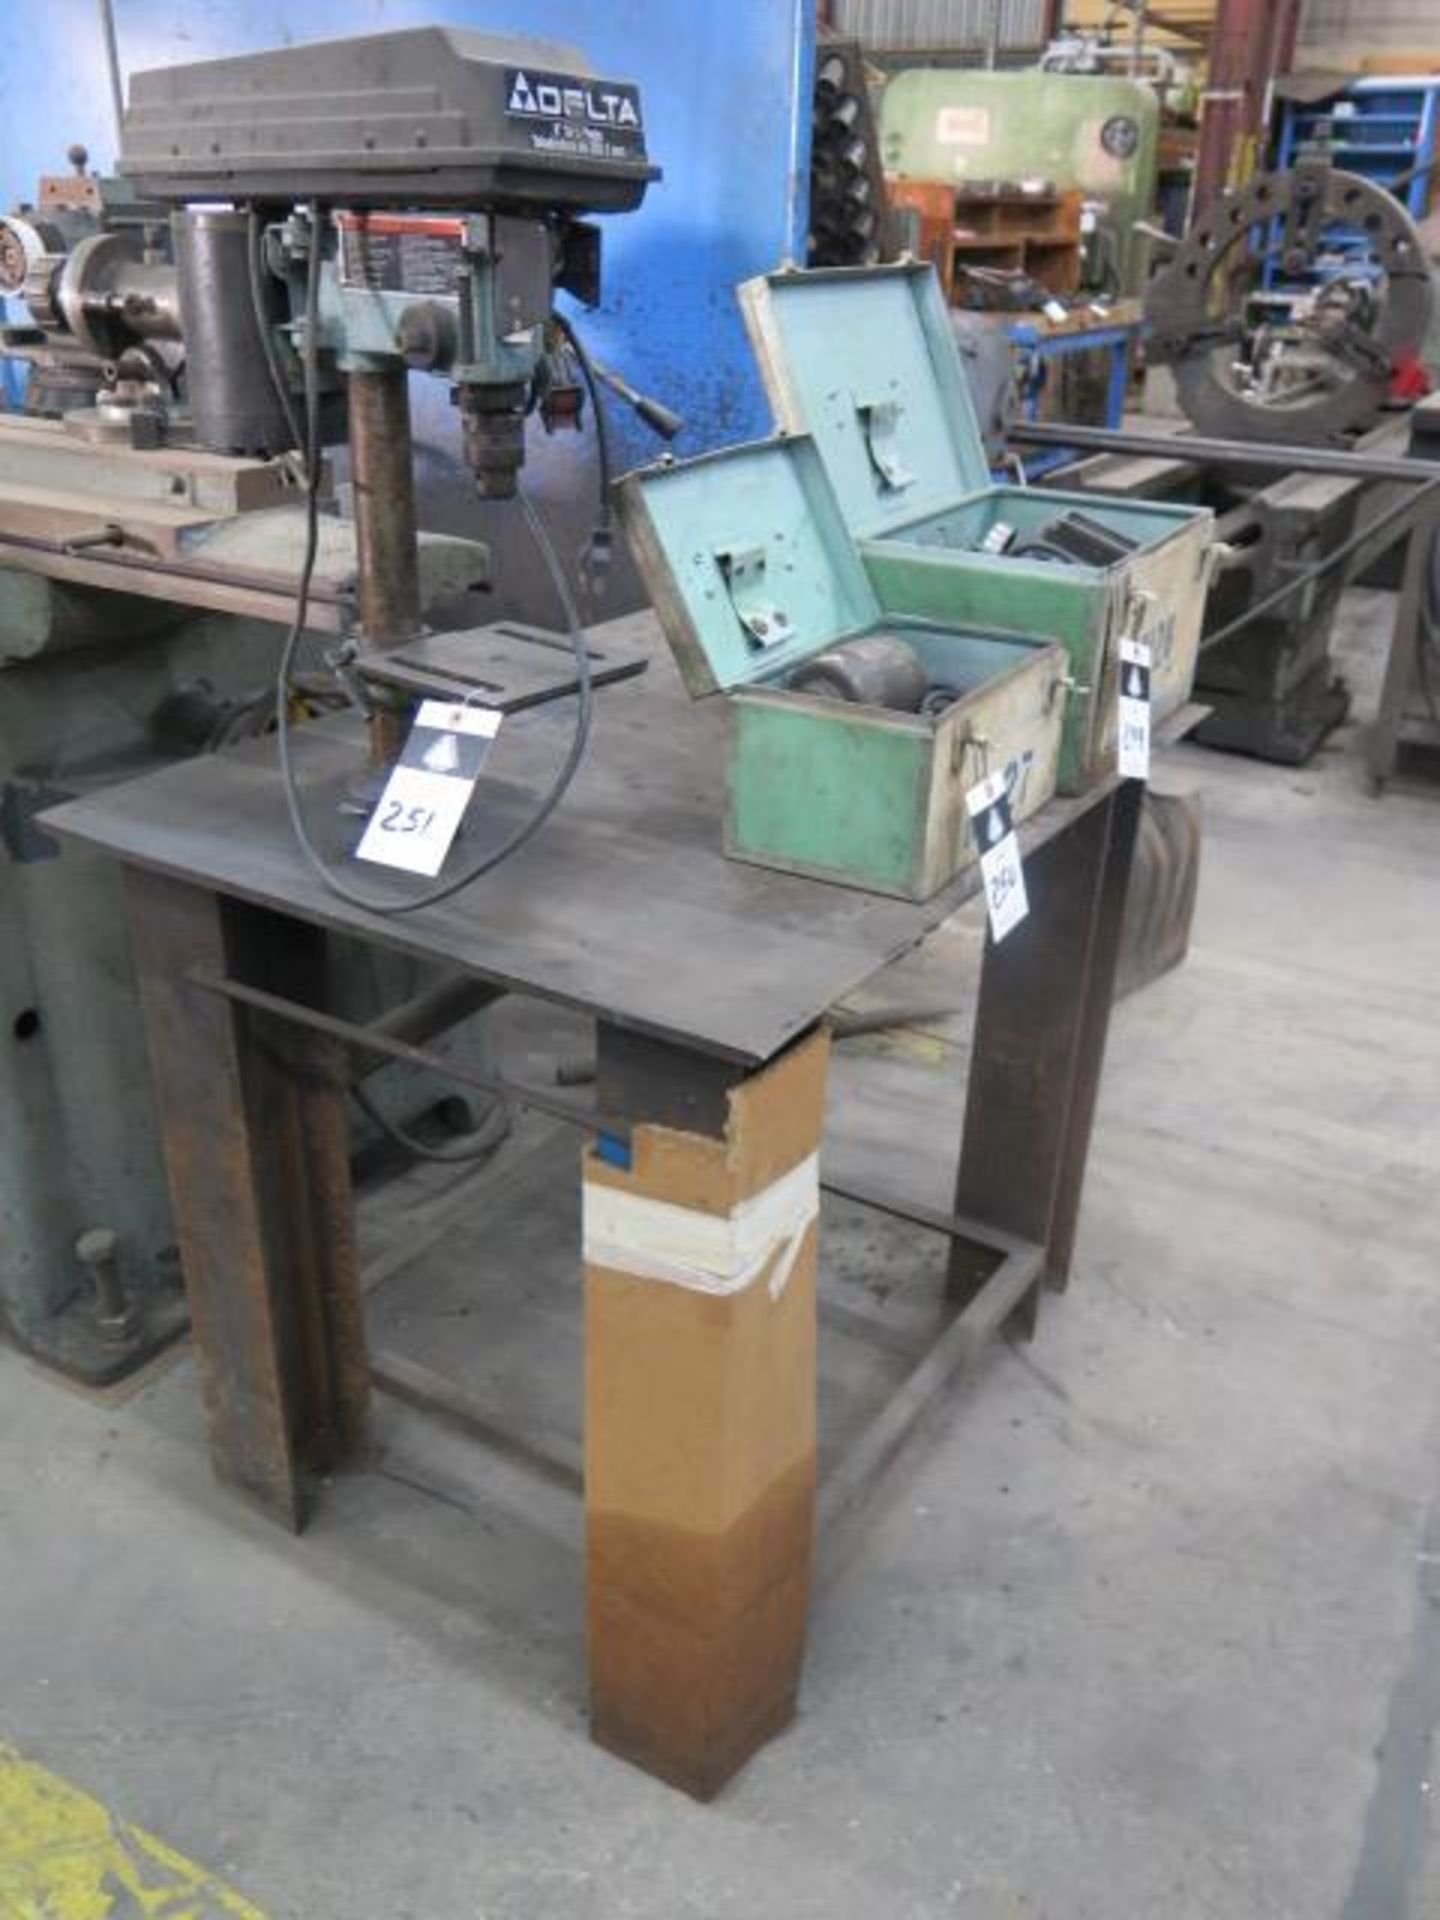 30 1/2" x 39 1/2" Steel Table w/ Delta 8" Drill Press (SOLD AS-IS - NO WARRANTY)